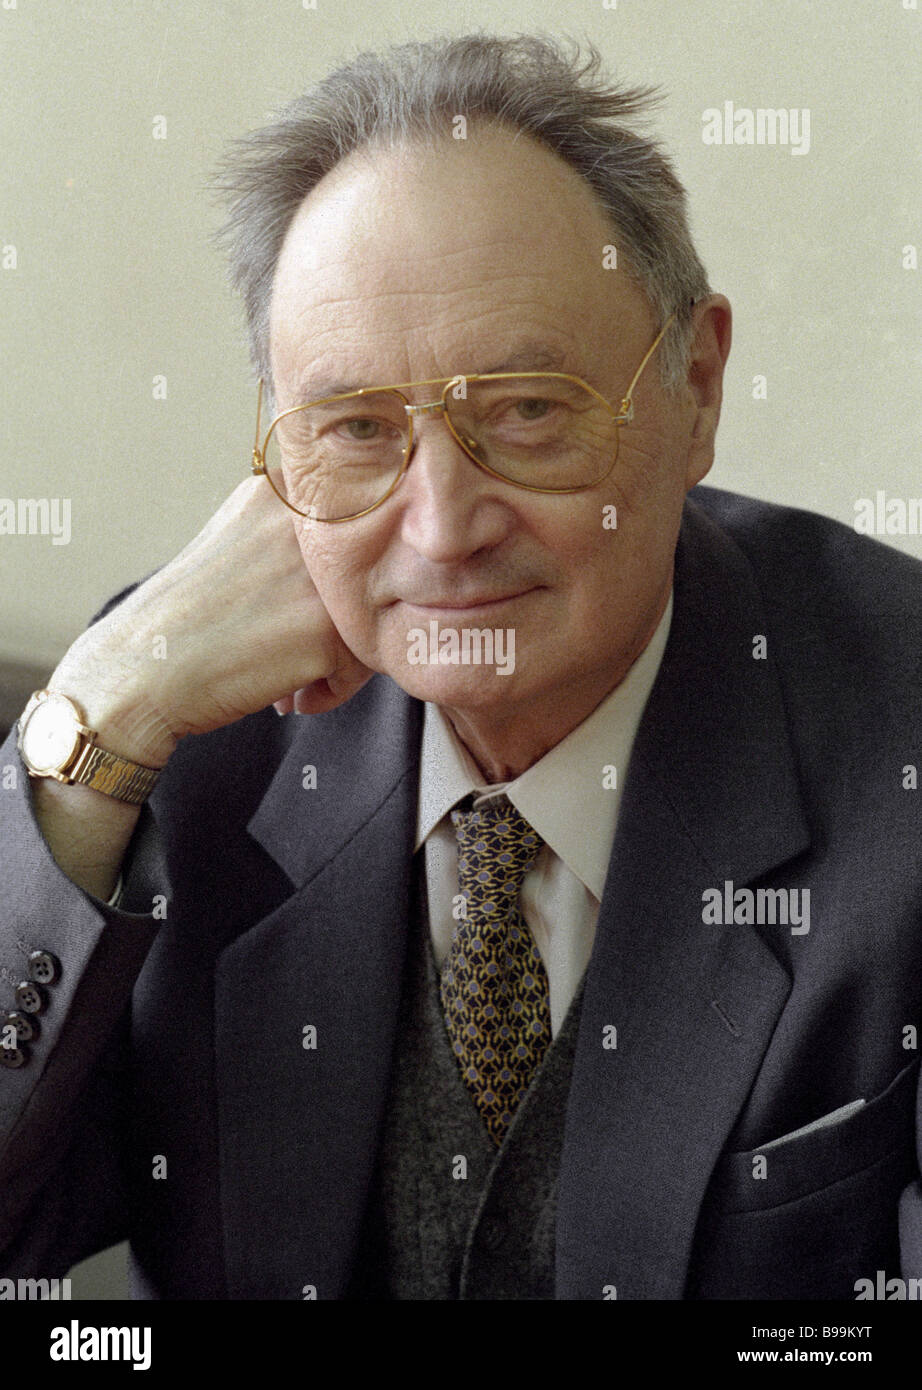 Gennady Gerasimov journalist and diplomat Stock Photo - Alamy